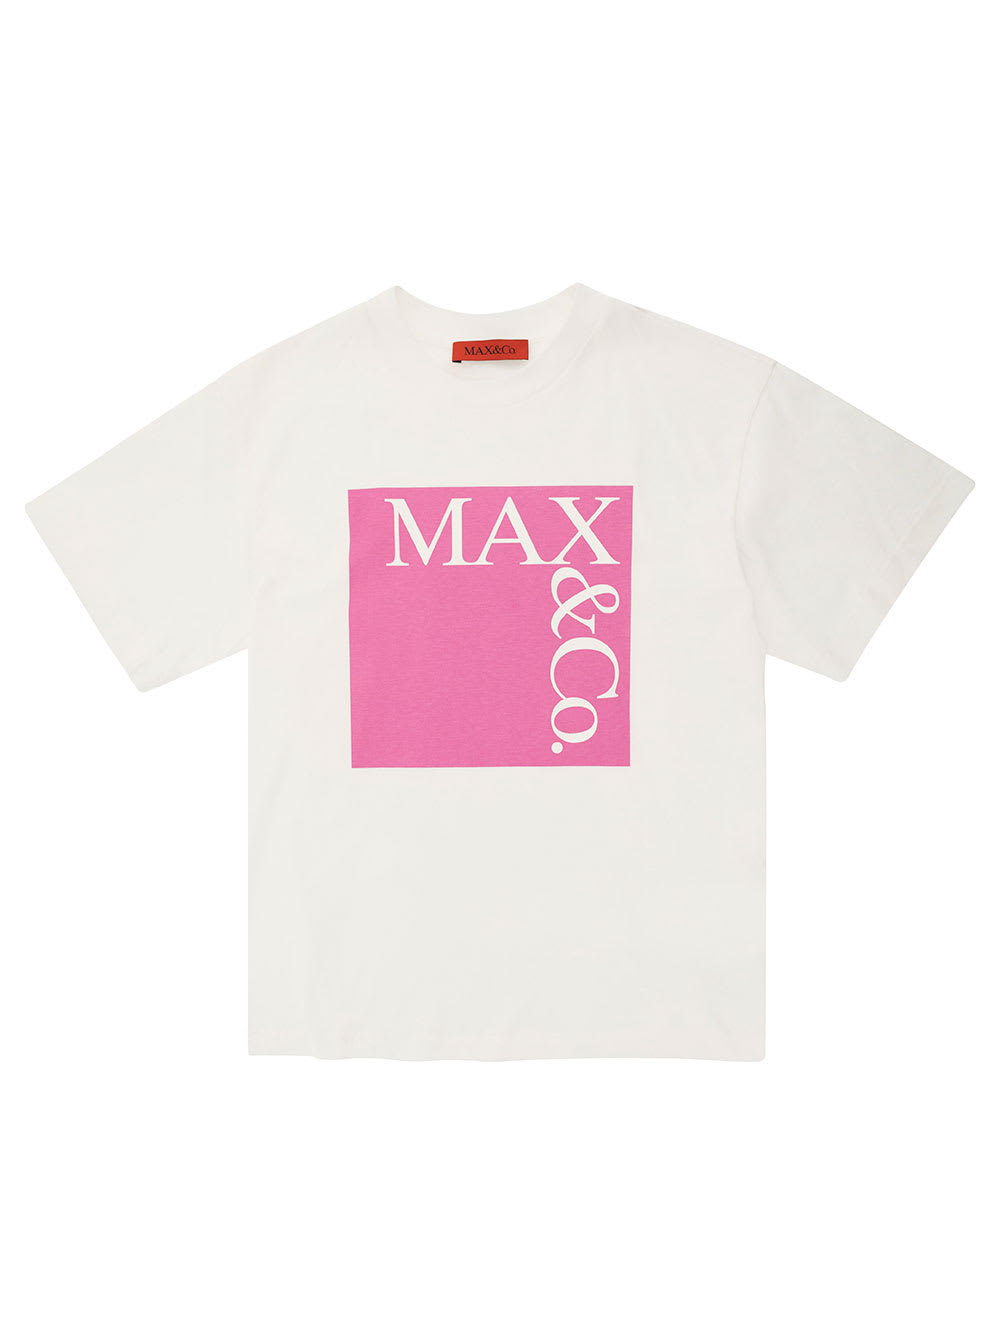 Max&amp;co. Kids' Mx0005mx014maxt1fmx10a In Multicolor